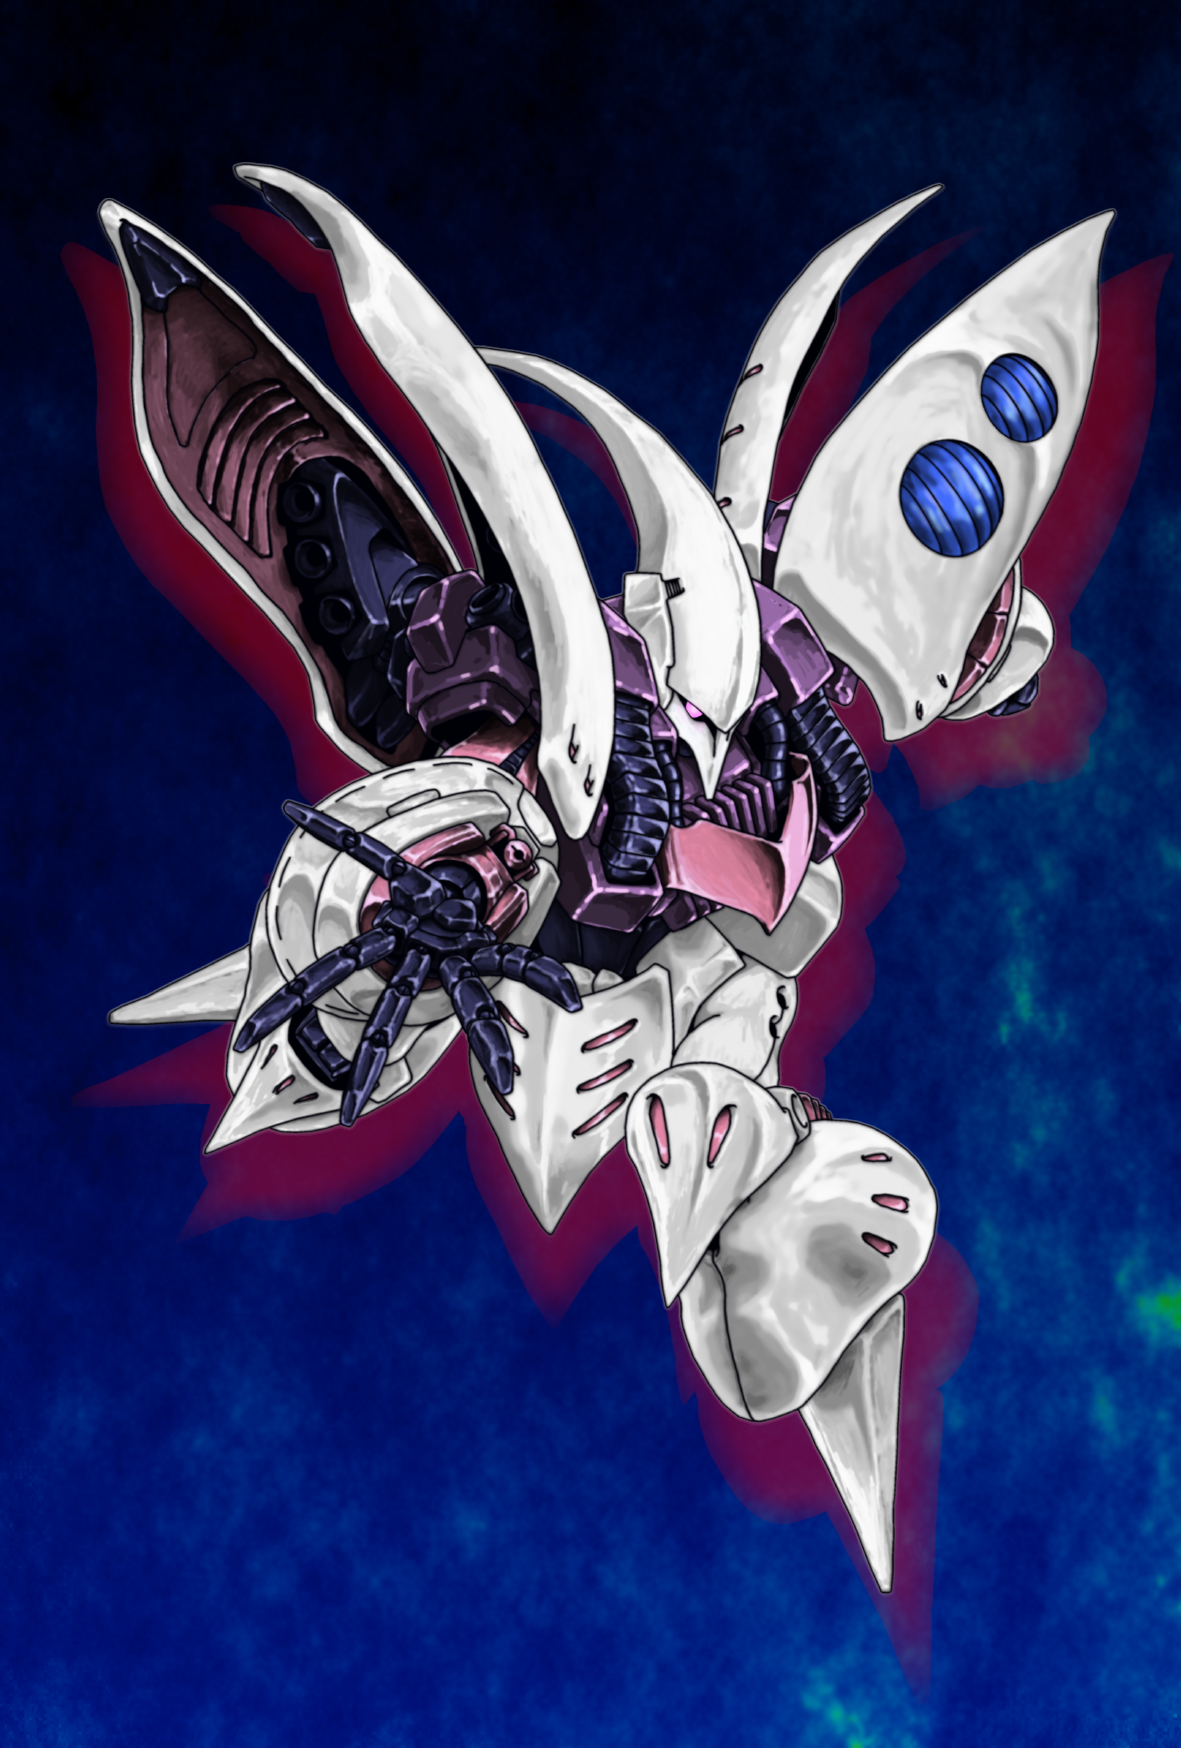 Anime 1181x1748 Qubeley anime mechs Super Robot Taisen Mobile Suit Zeta Gundam Mobile Suit Gundam ZZ artwork Mobile Suit digital art fan art